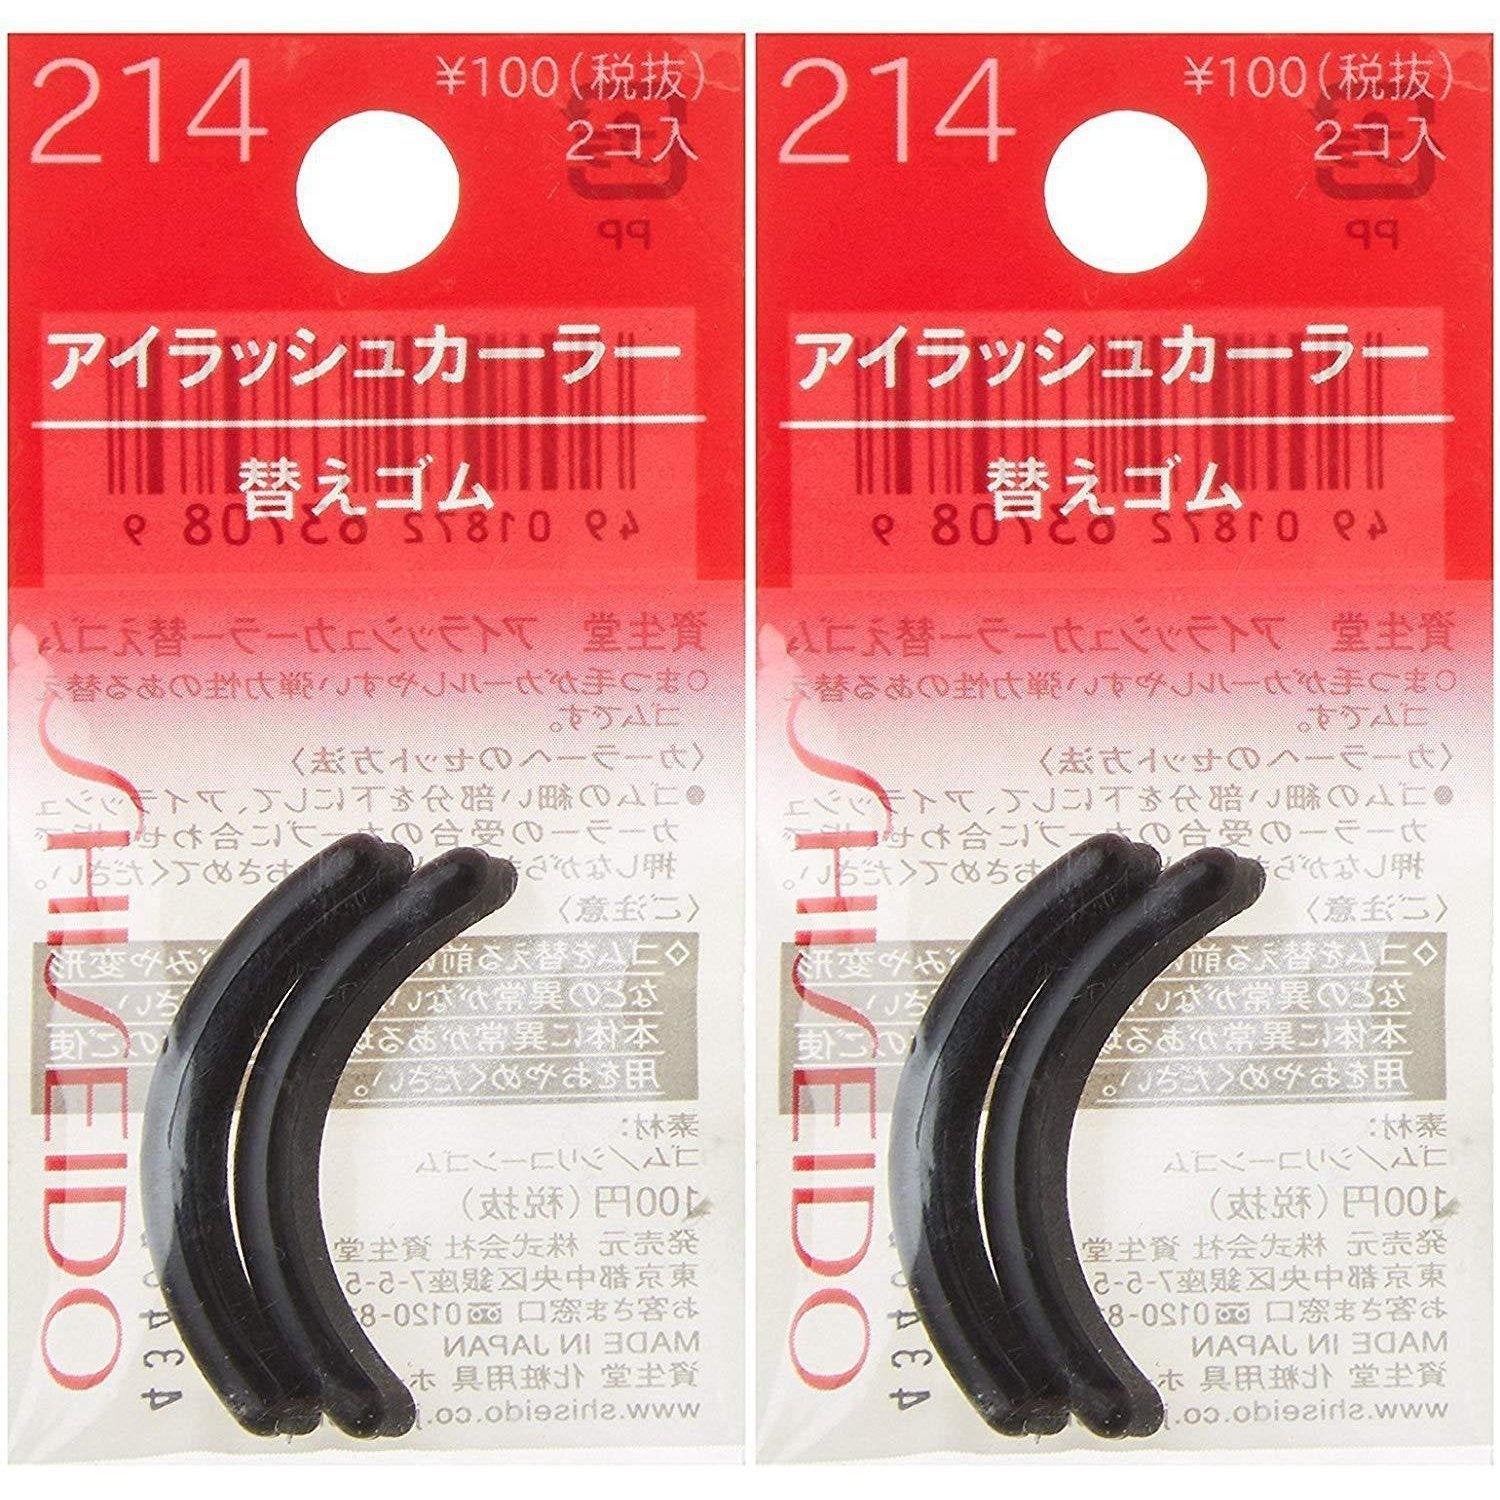 P-1-SHIS-CURPAD-214:2-Shiseido Eyelash Curler Rubber Pad Refills 214 (Pack of 2).jpg